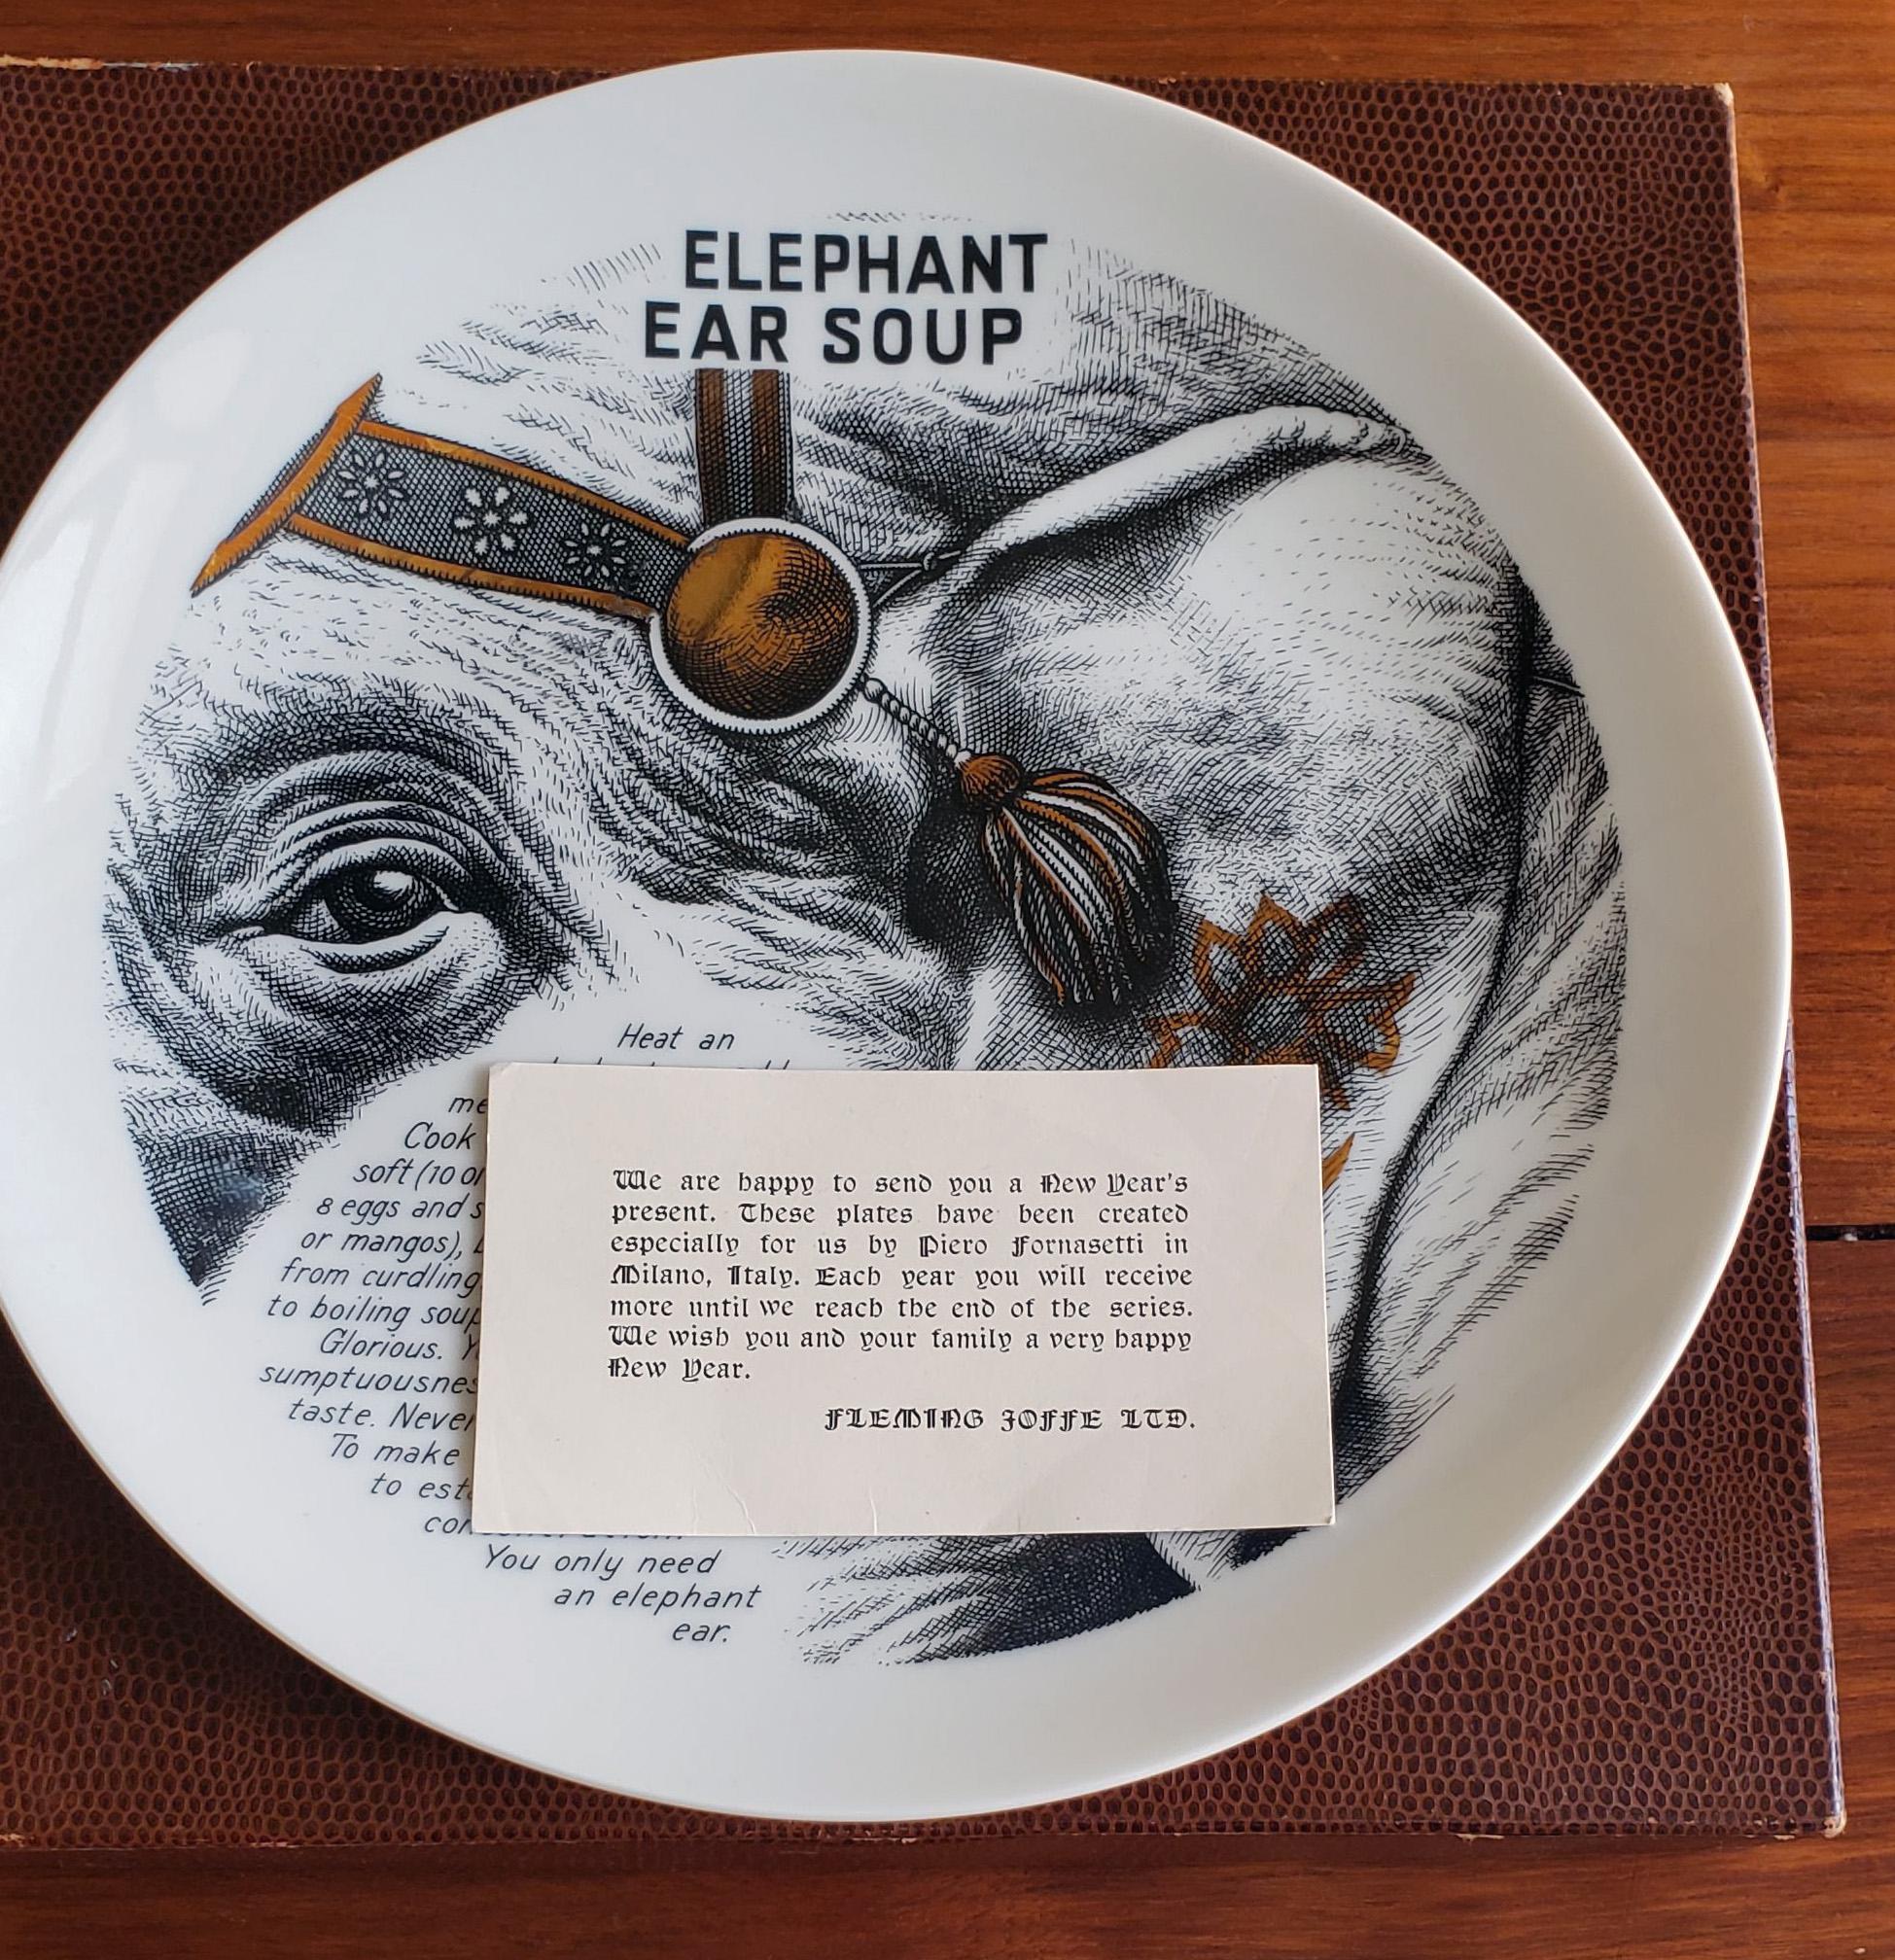 Mid-Century Modern Piero Fornasetti Fleming Joffe Porcelain Recipe Plate, Elephant Ear Soup